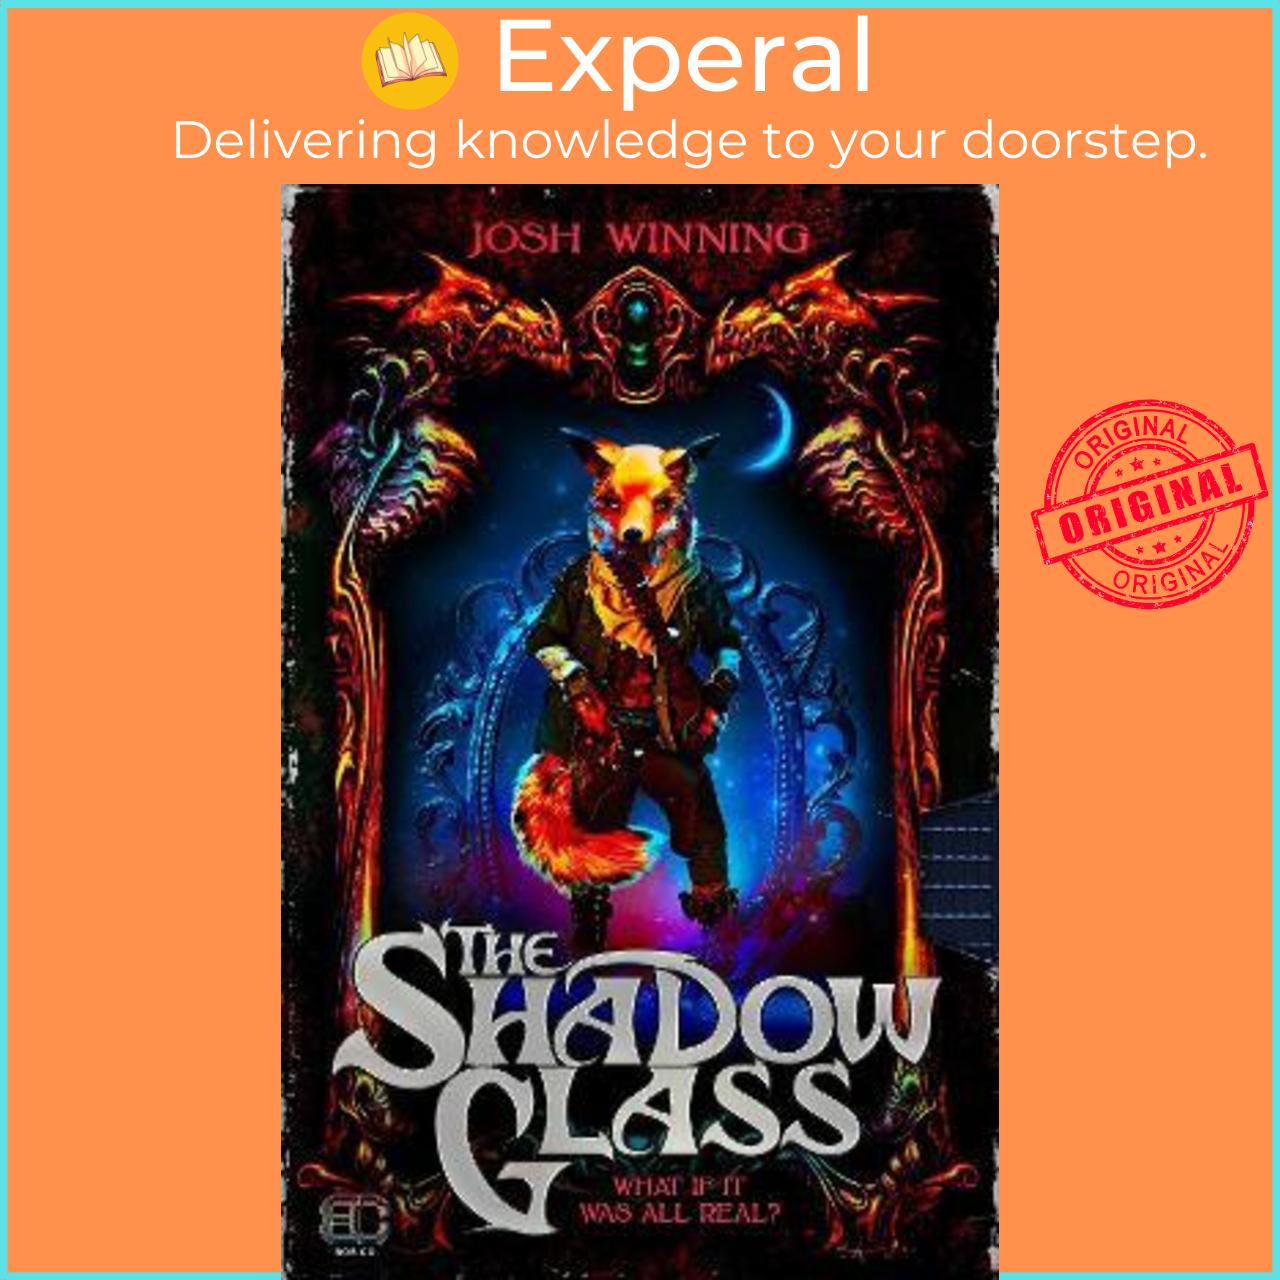 Sách - The Shadow Glass by Josh Winning (UK edition, paperback)